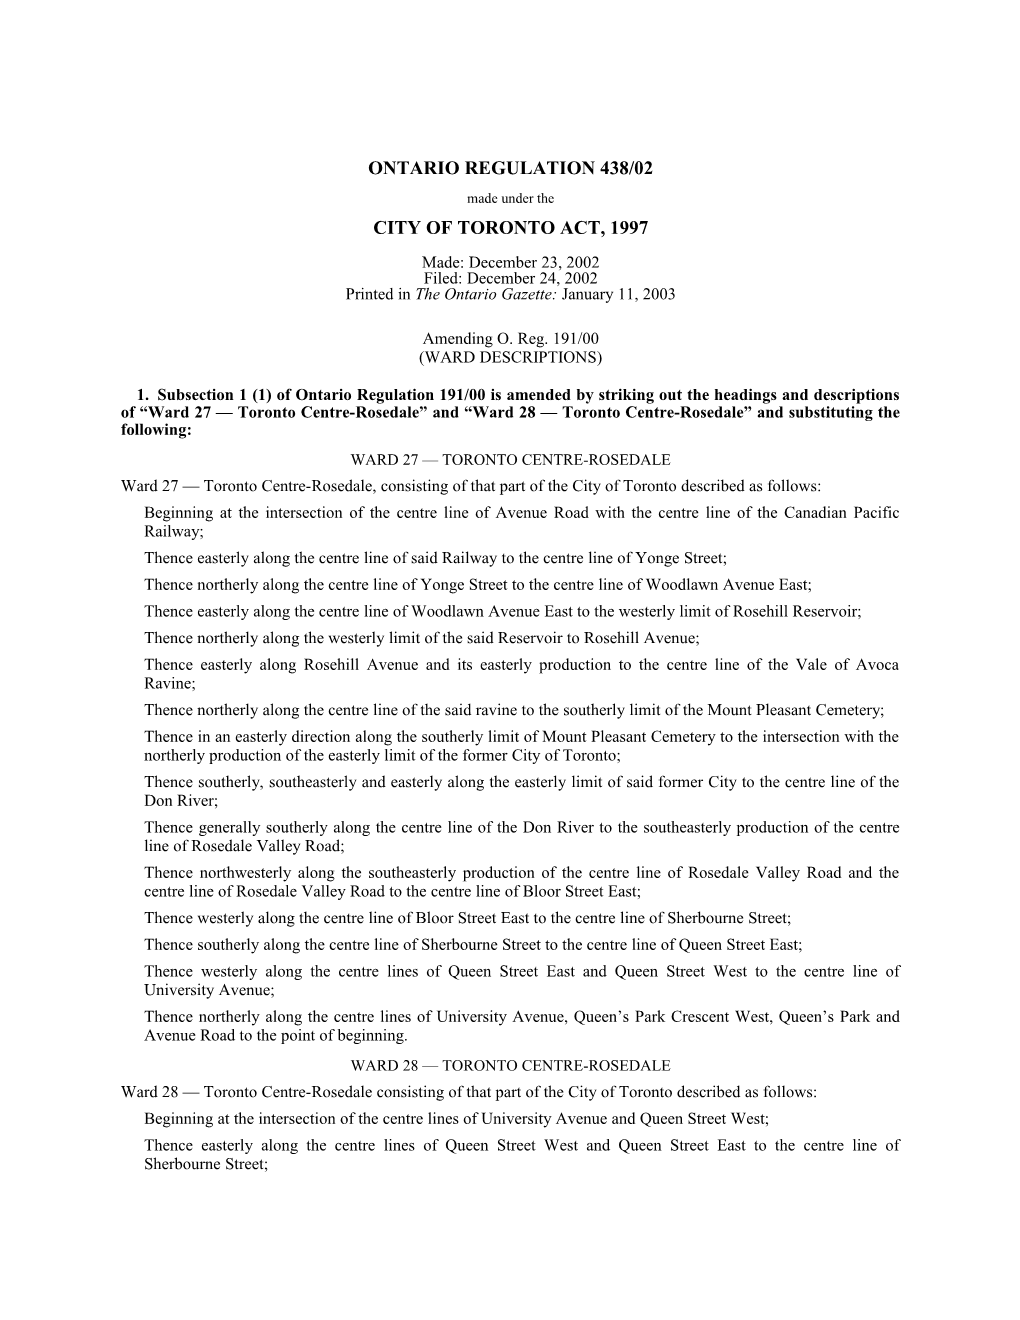 CITY of TORONTO ACT, 1997 - O. Reg. 438/02